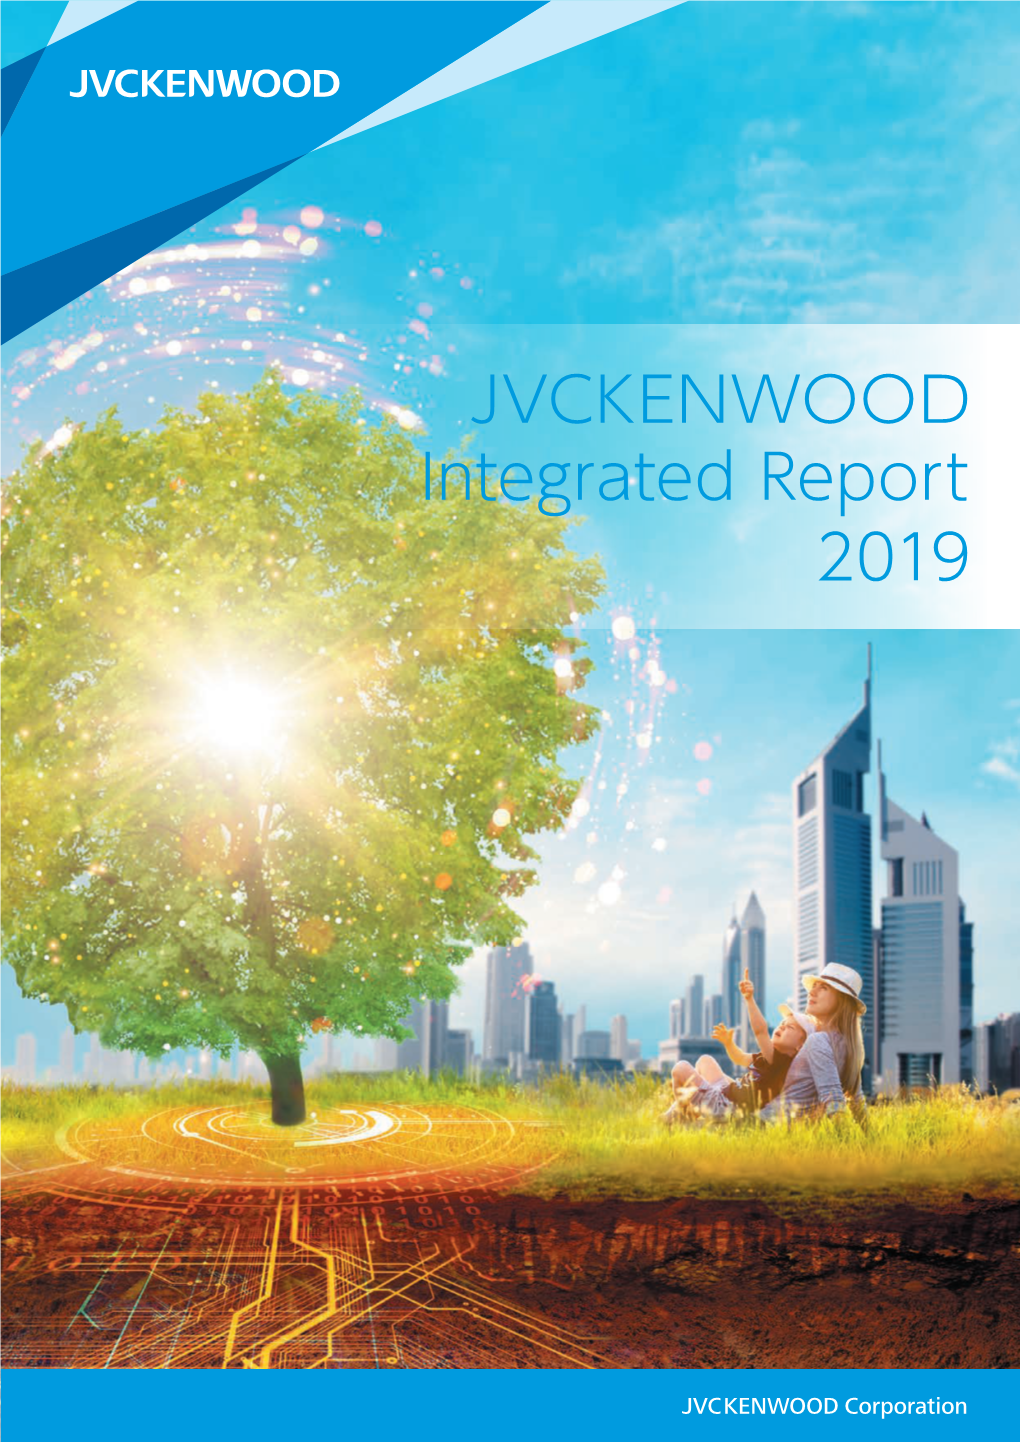 JVCKENWOOD Integrated Report 2019 (PDF: 9.22